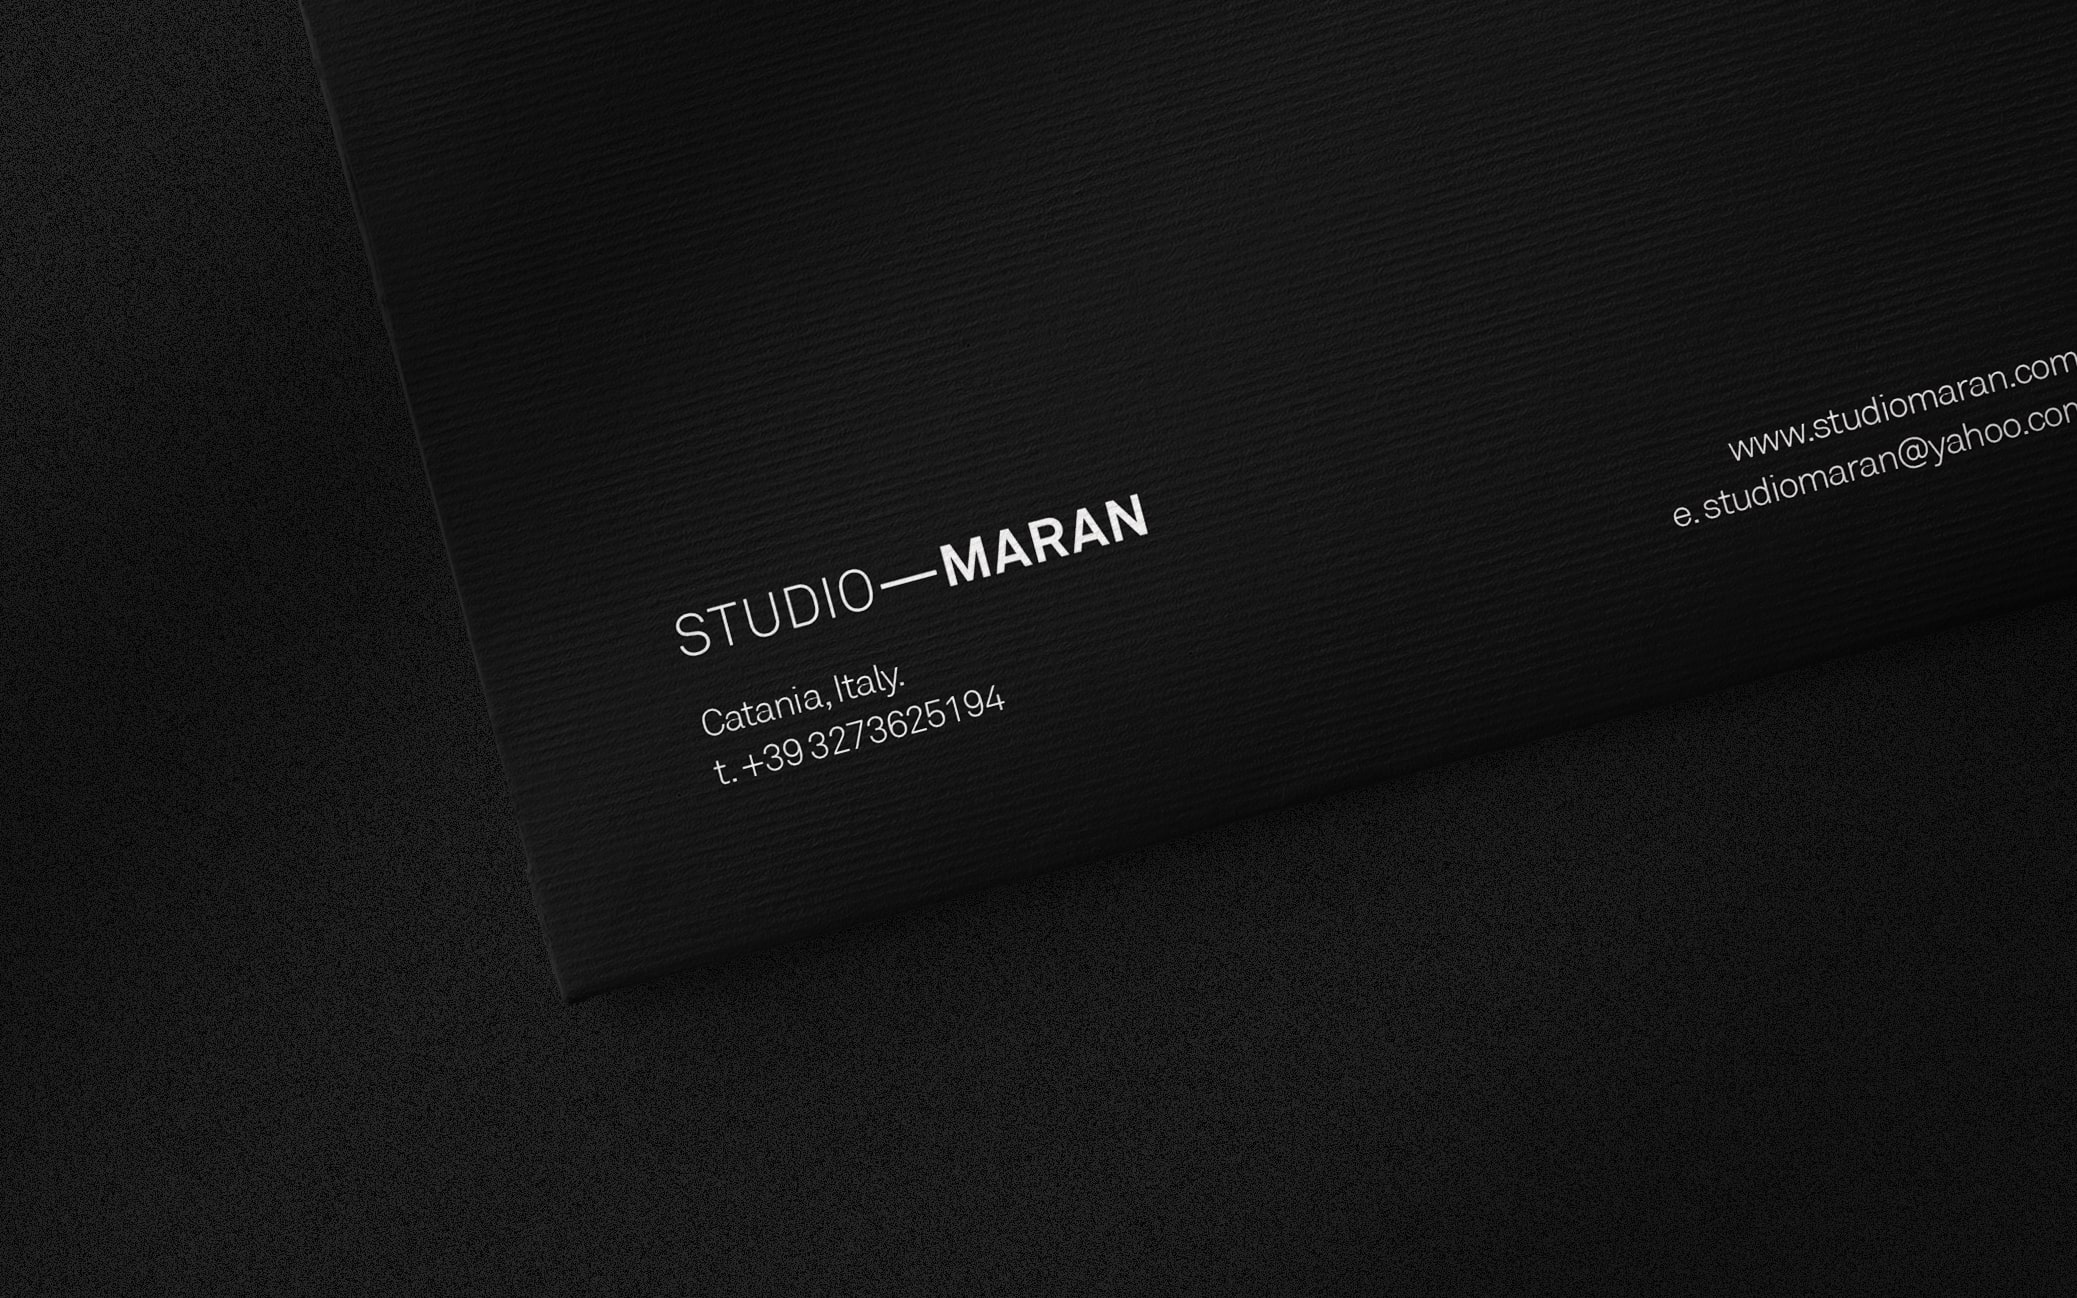 Studio-Maran Envelope Particular